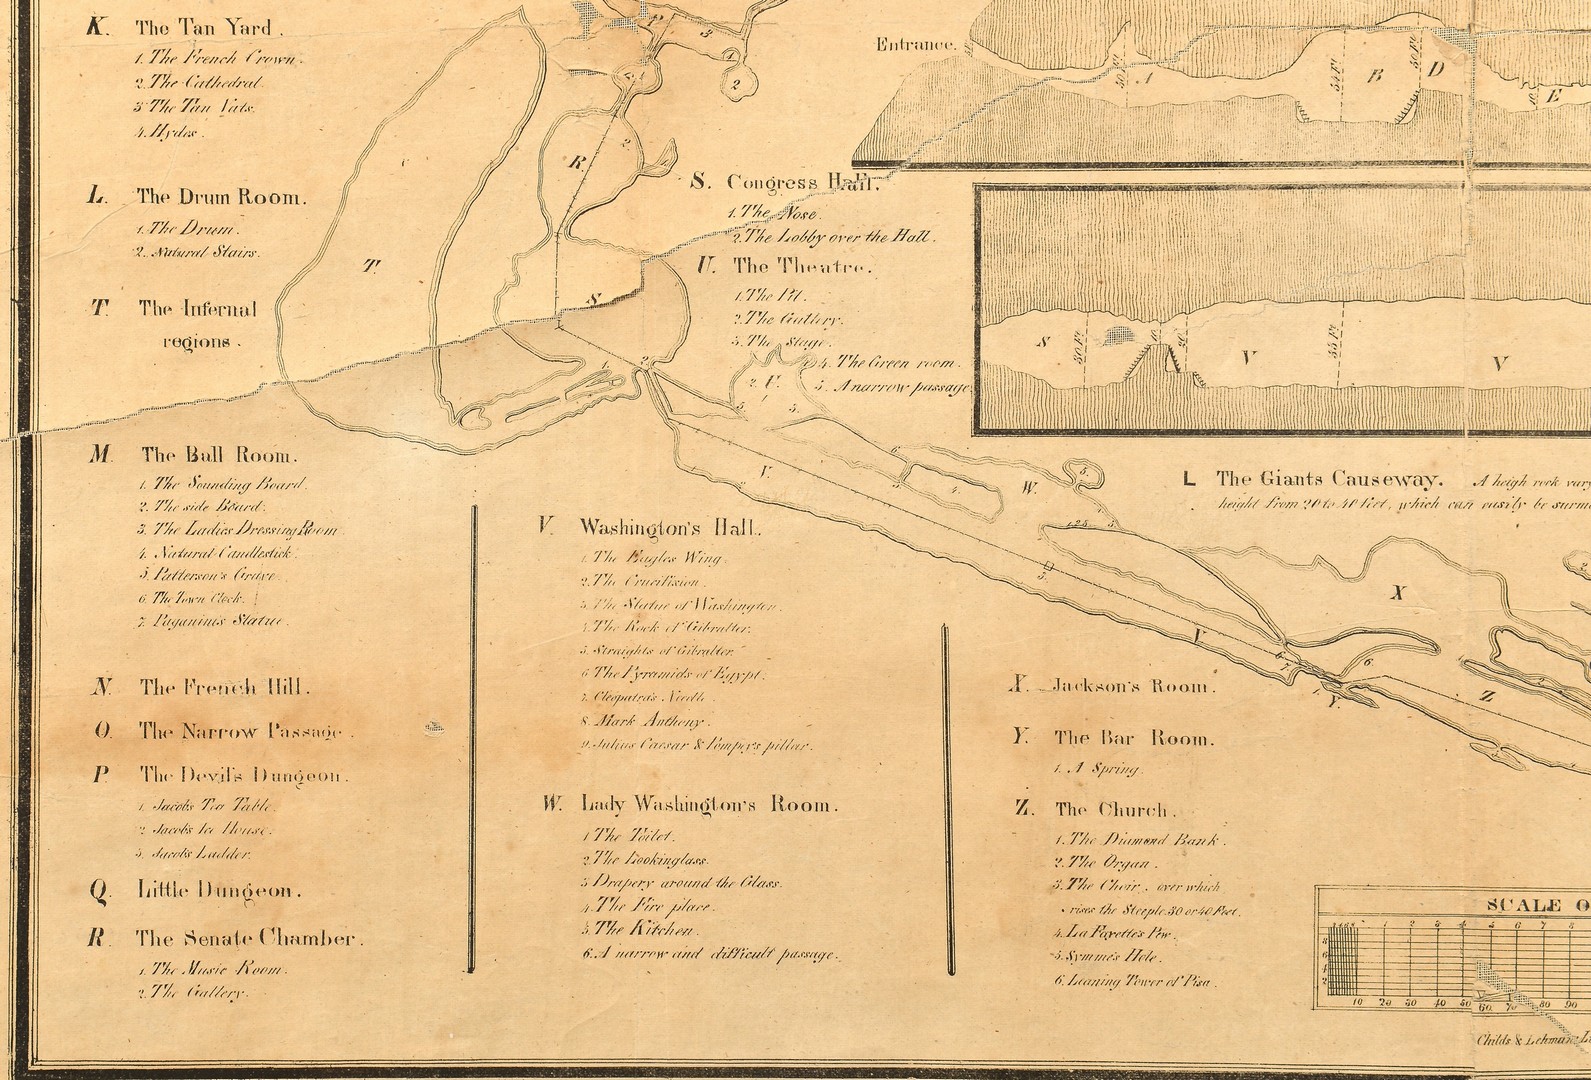 Lot 574: Weyer's Grand Caverns Cave Map, ca. 1835